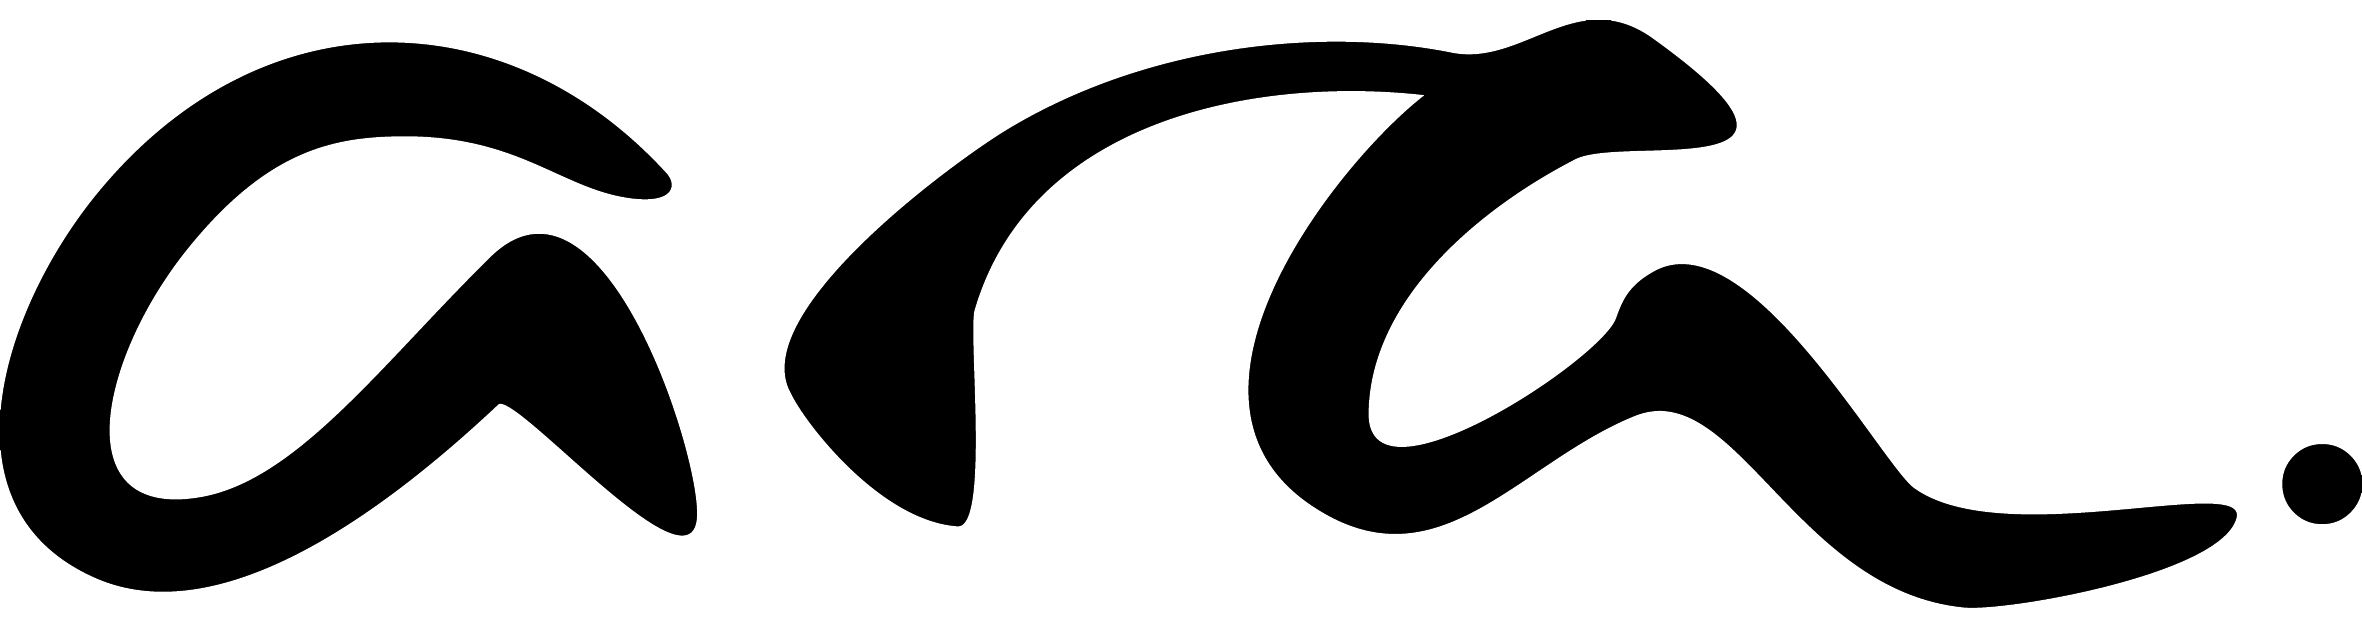 ara-Logo-2016-rot-black.jpg